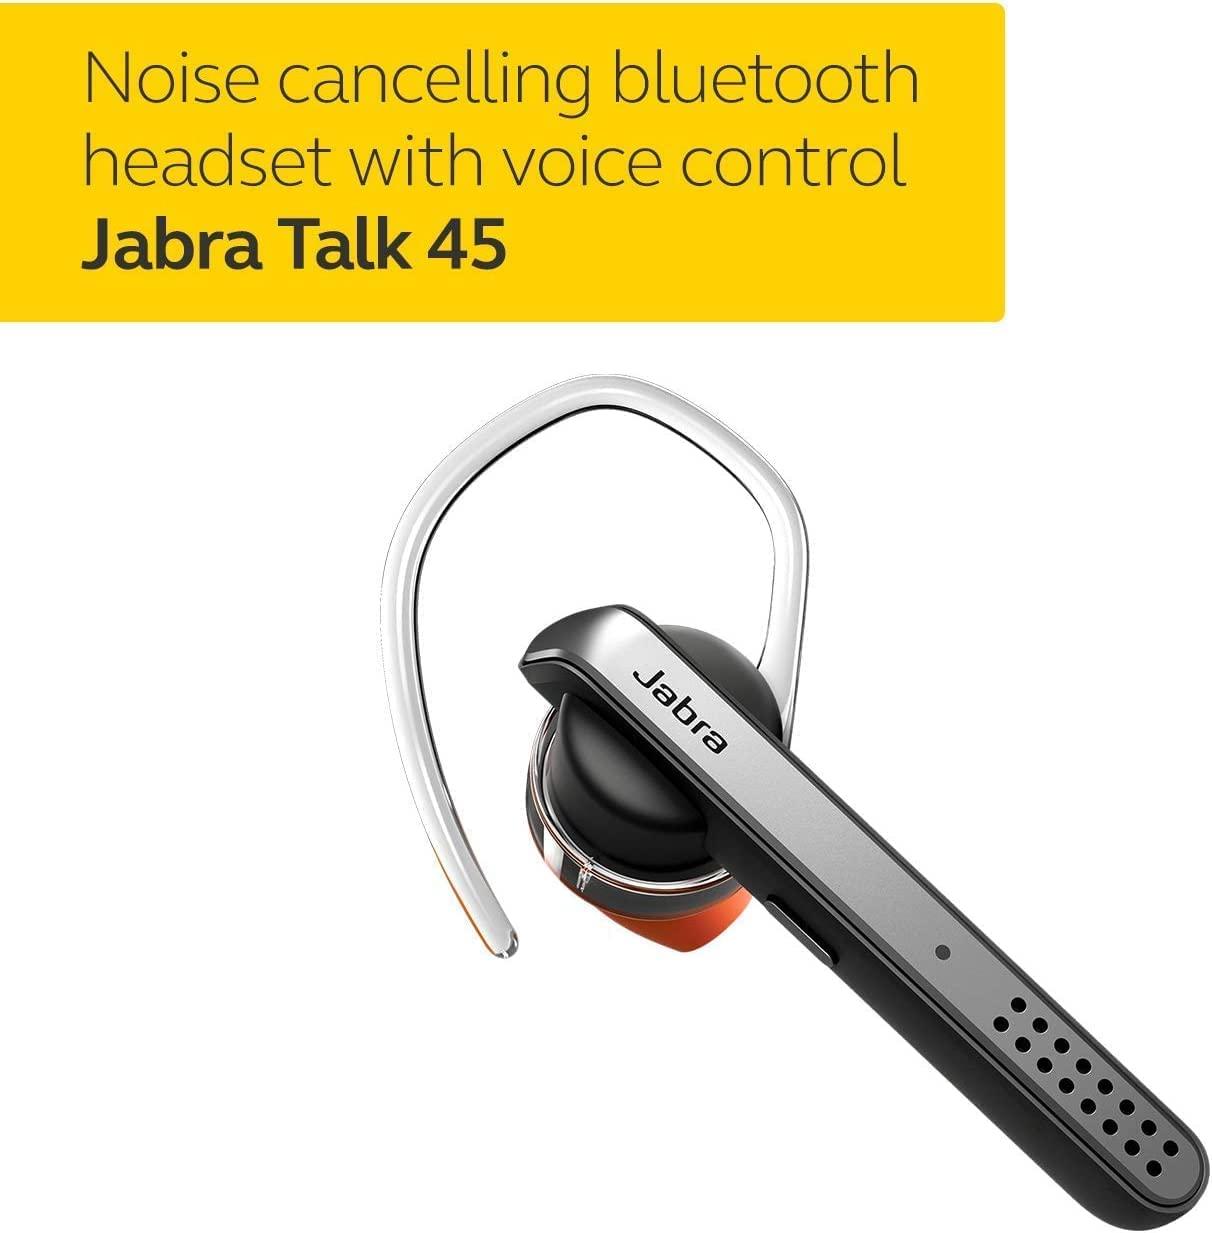 Jabra Talk 45 Bluetooth Headset for High Definition Hands-Free